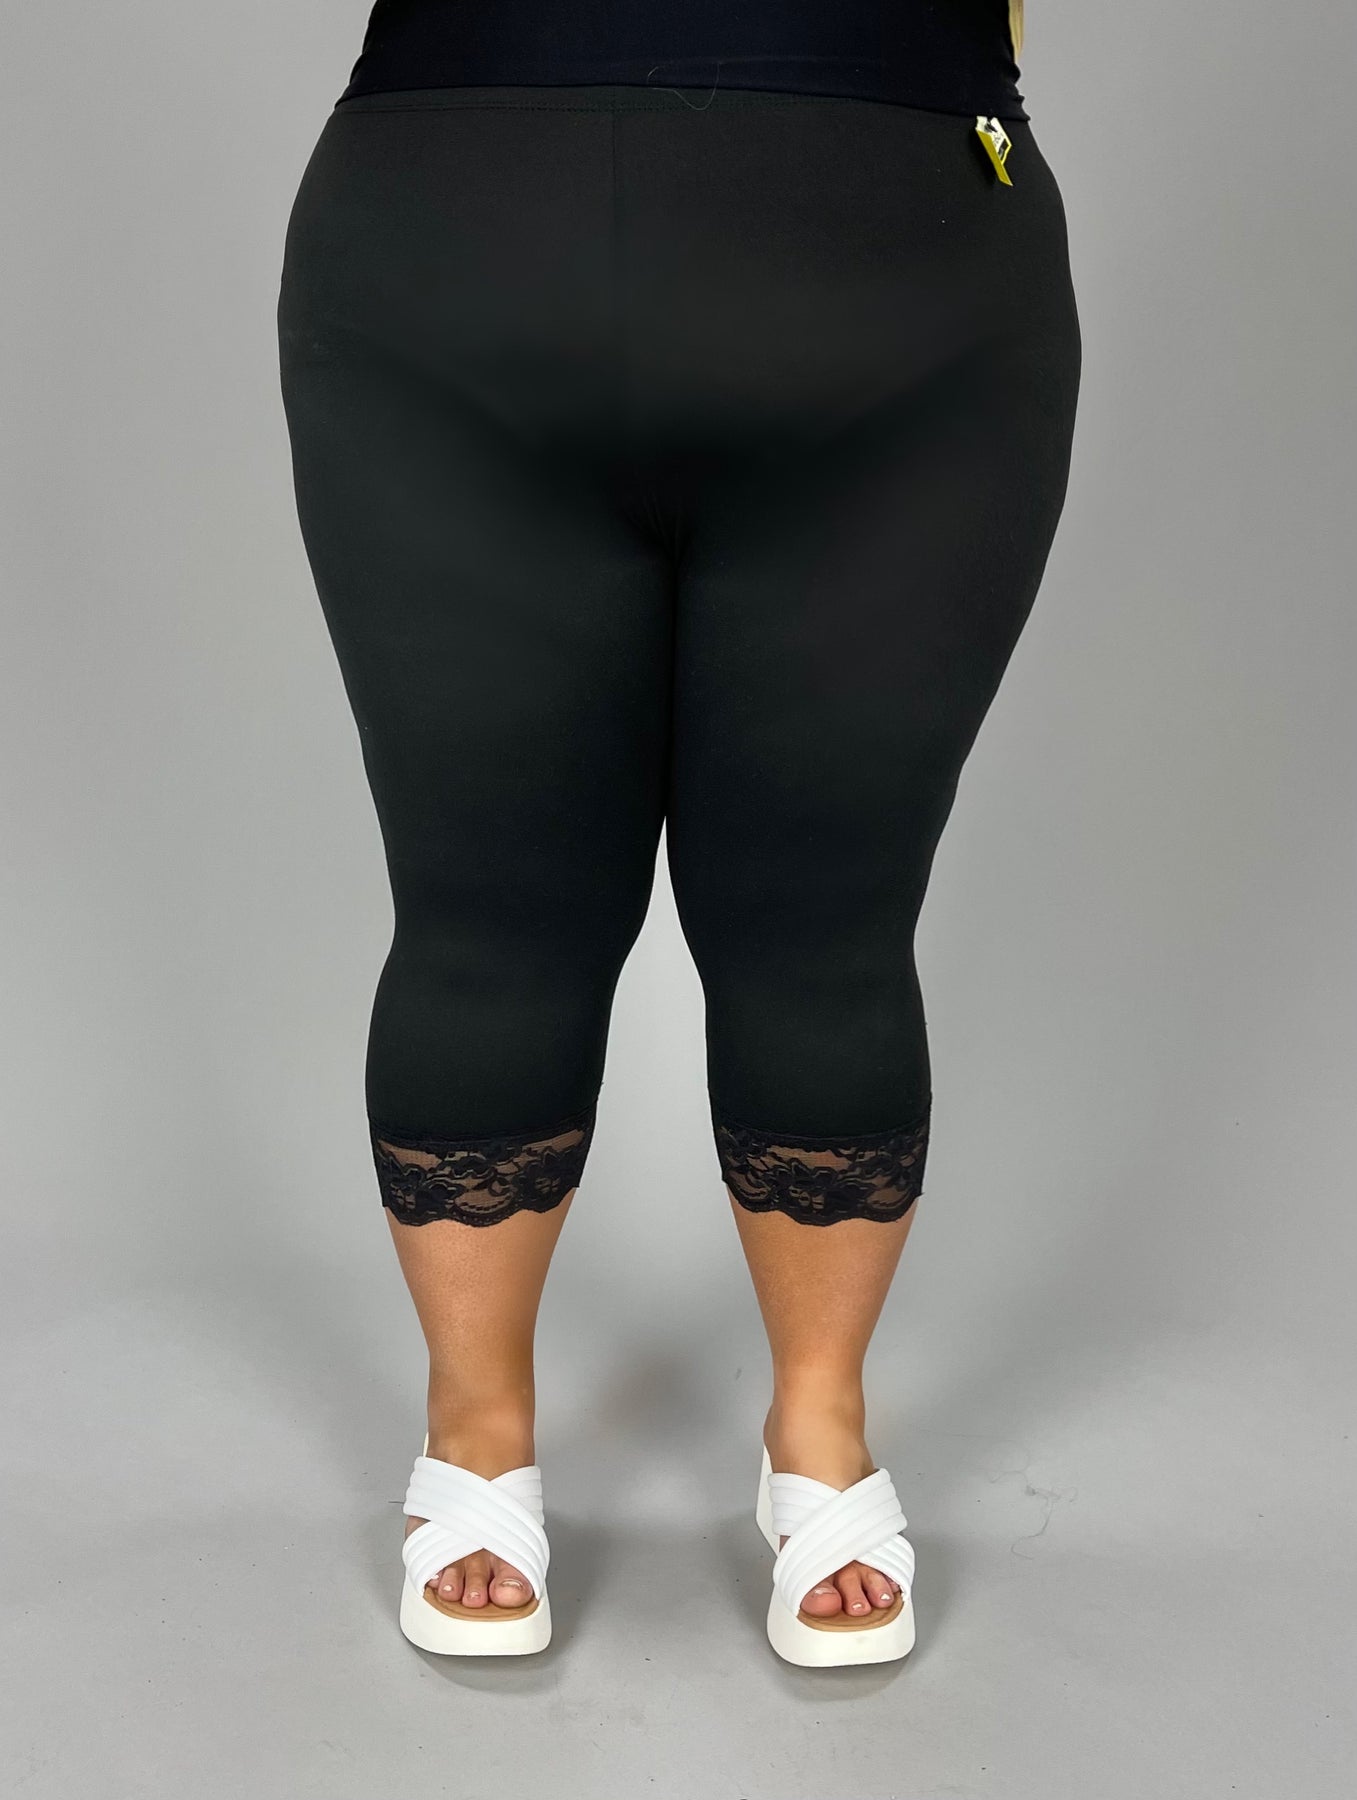 Black or grey Plus Size Casual Capri Leggings, Women's Plus